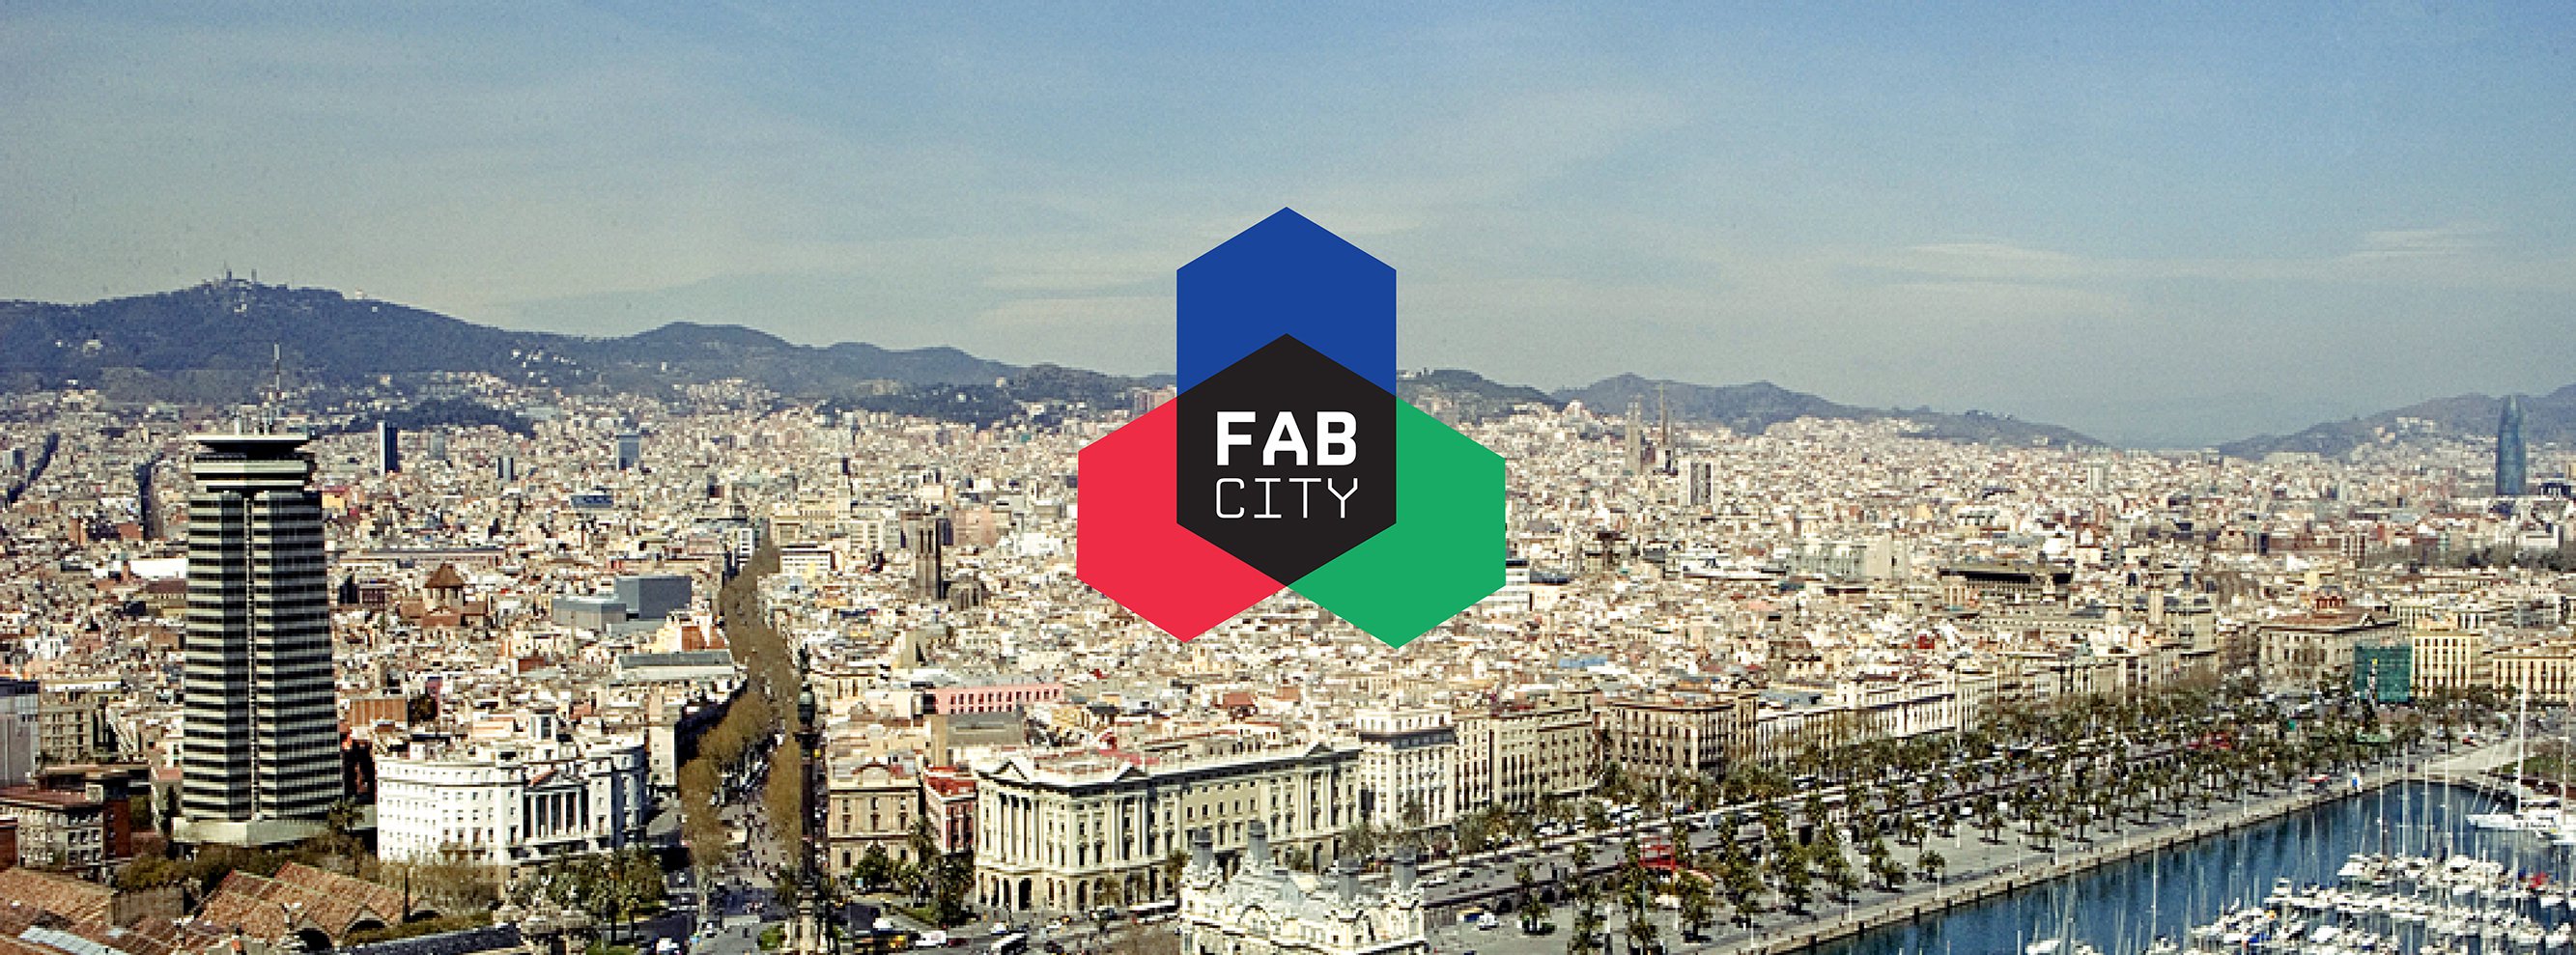 Barcelona – Fab City